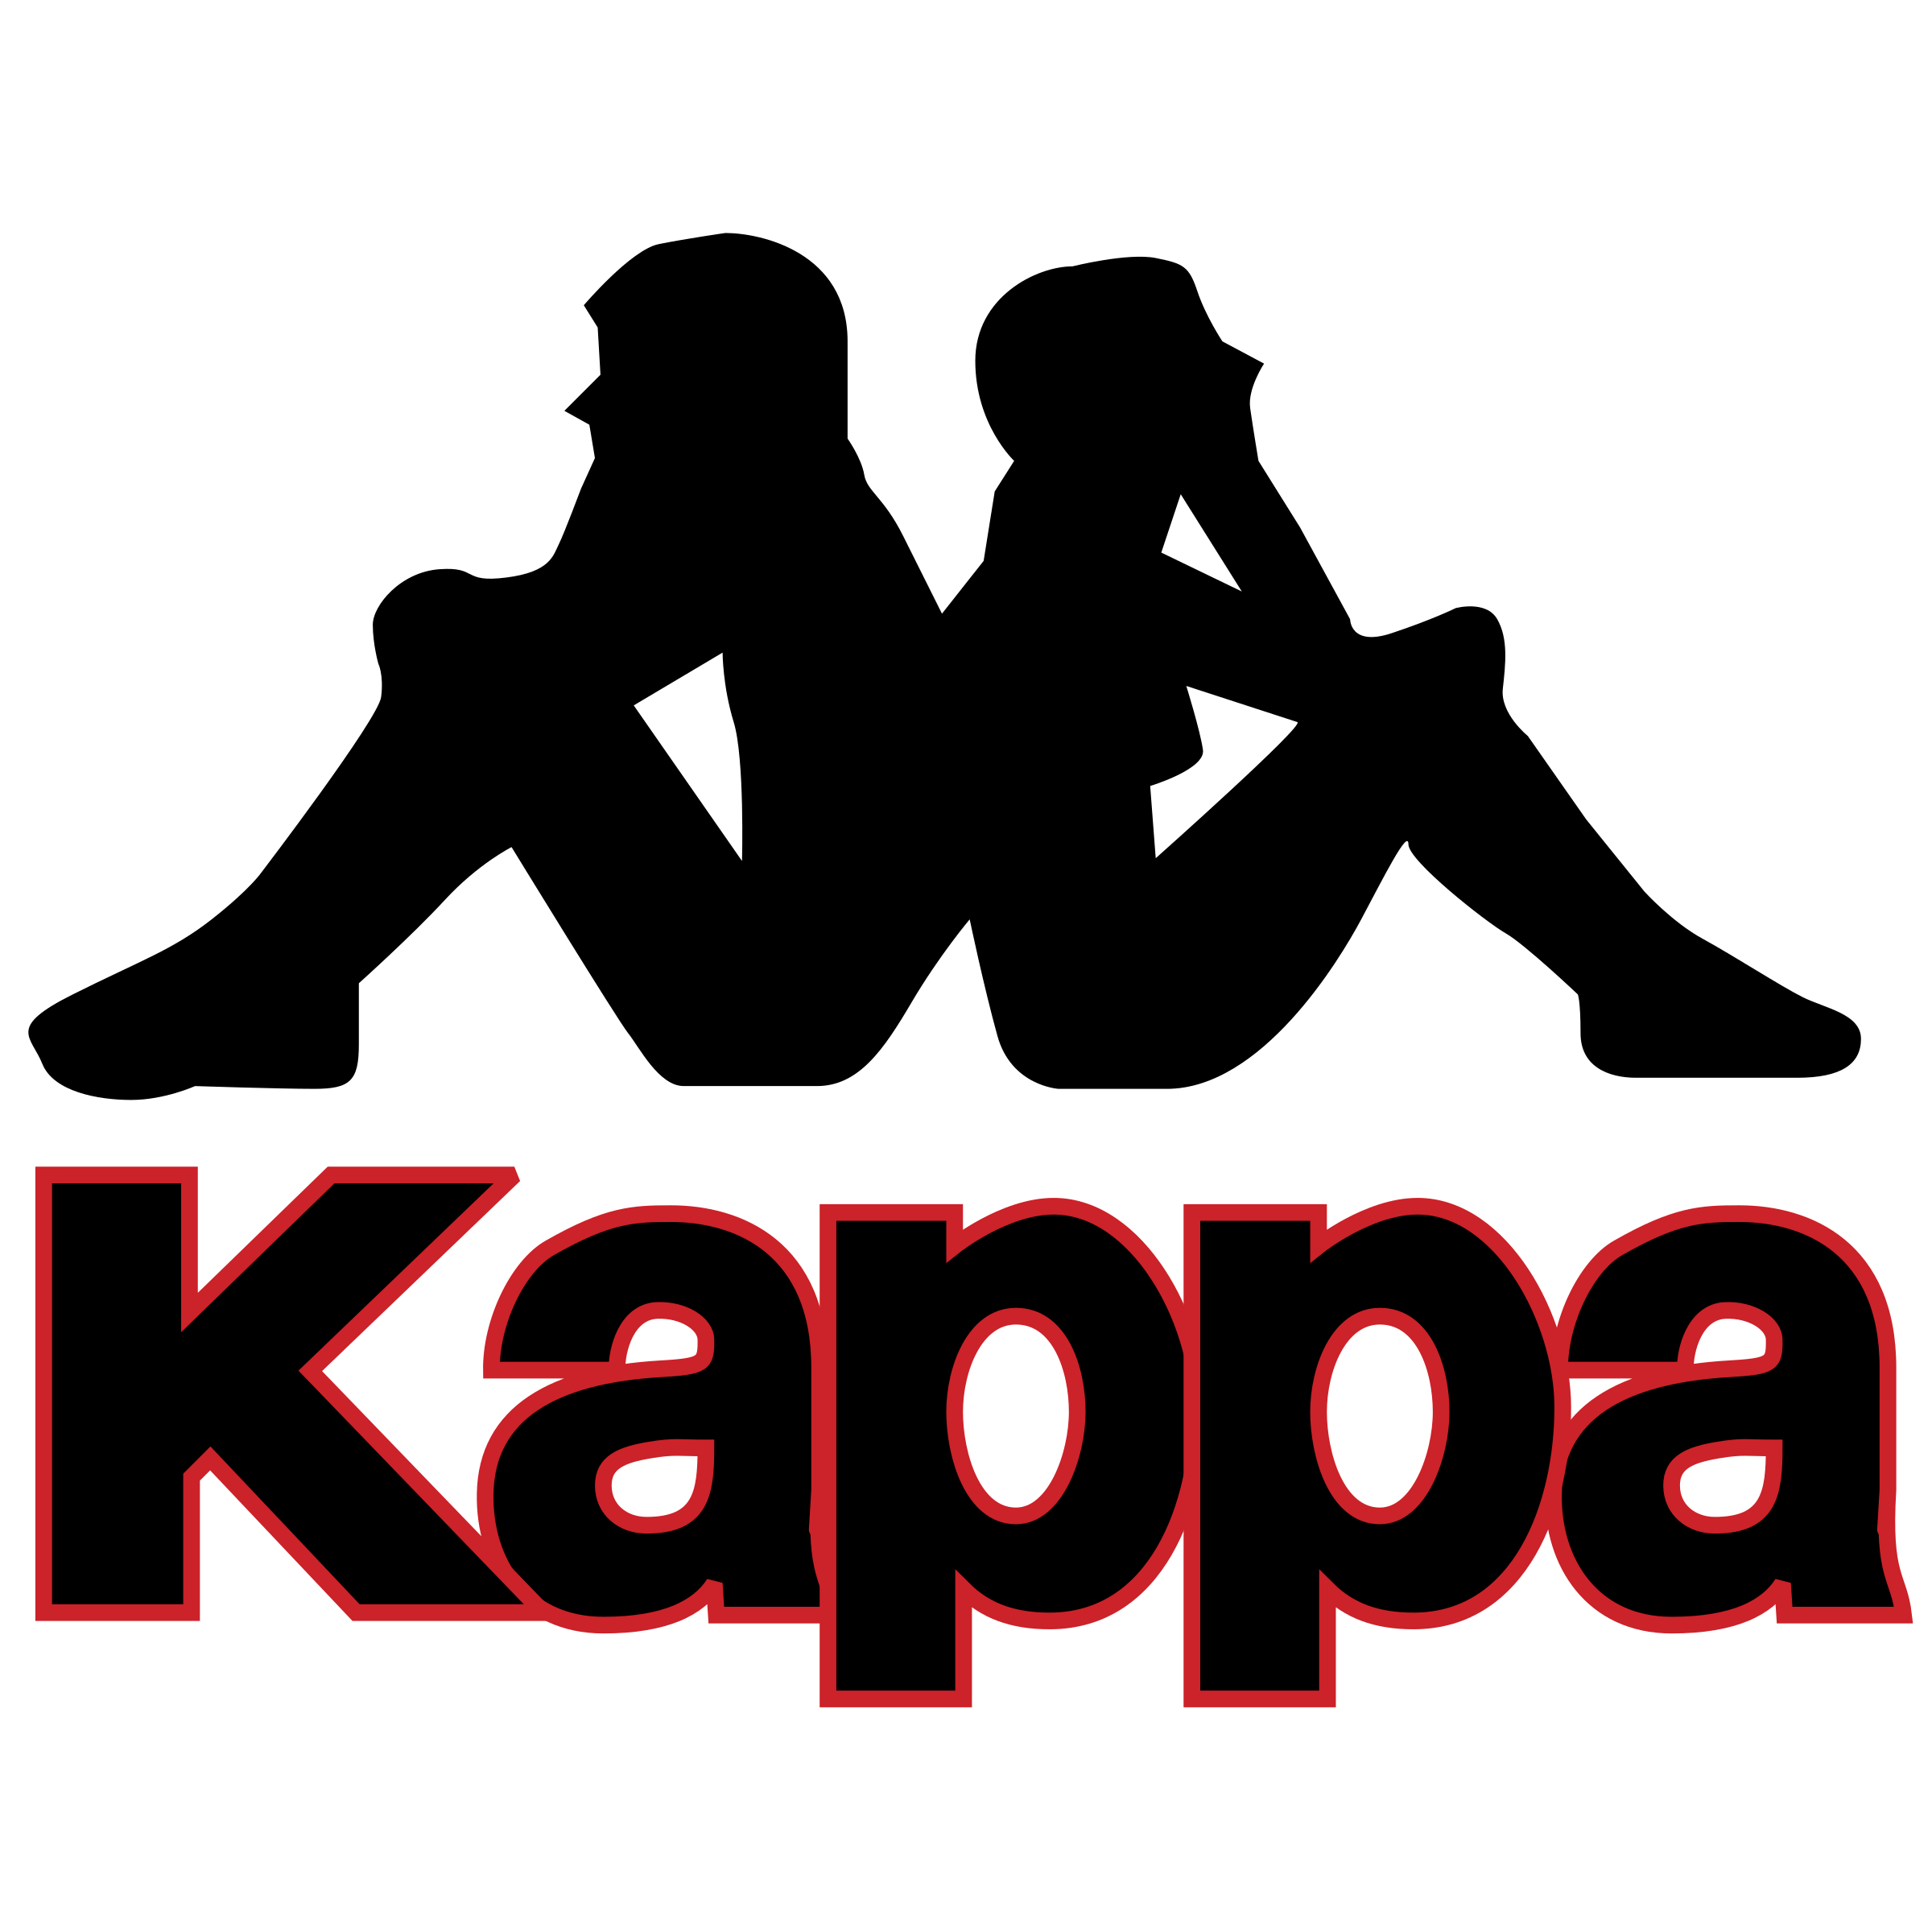 Kappa Logo - Kappa Logo PNG Transparent & SVG Vector - Freebie Supply